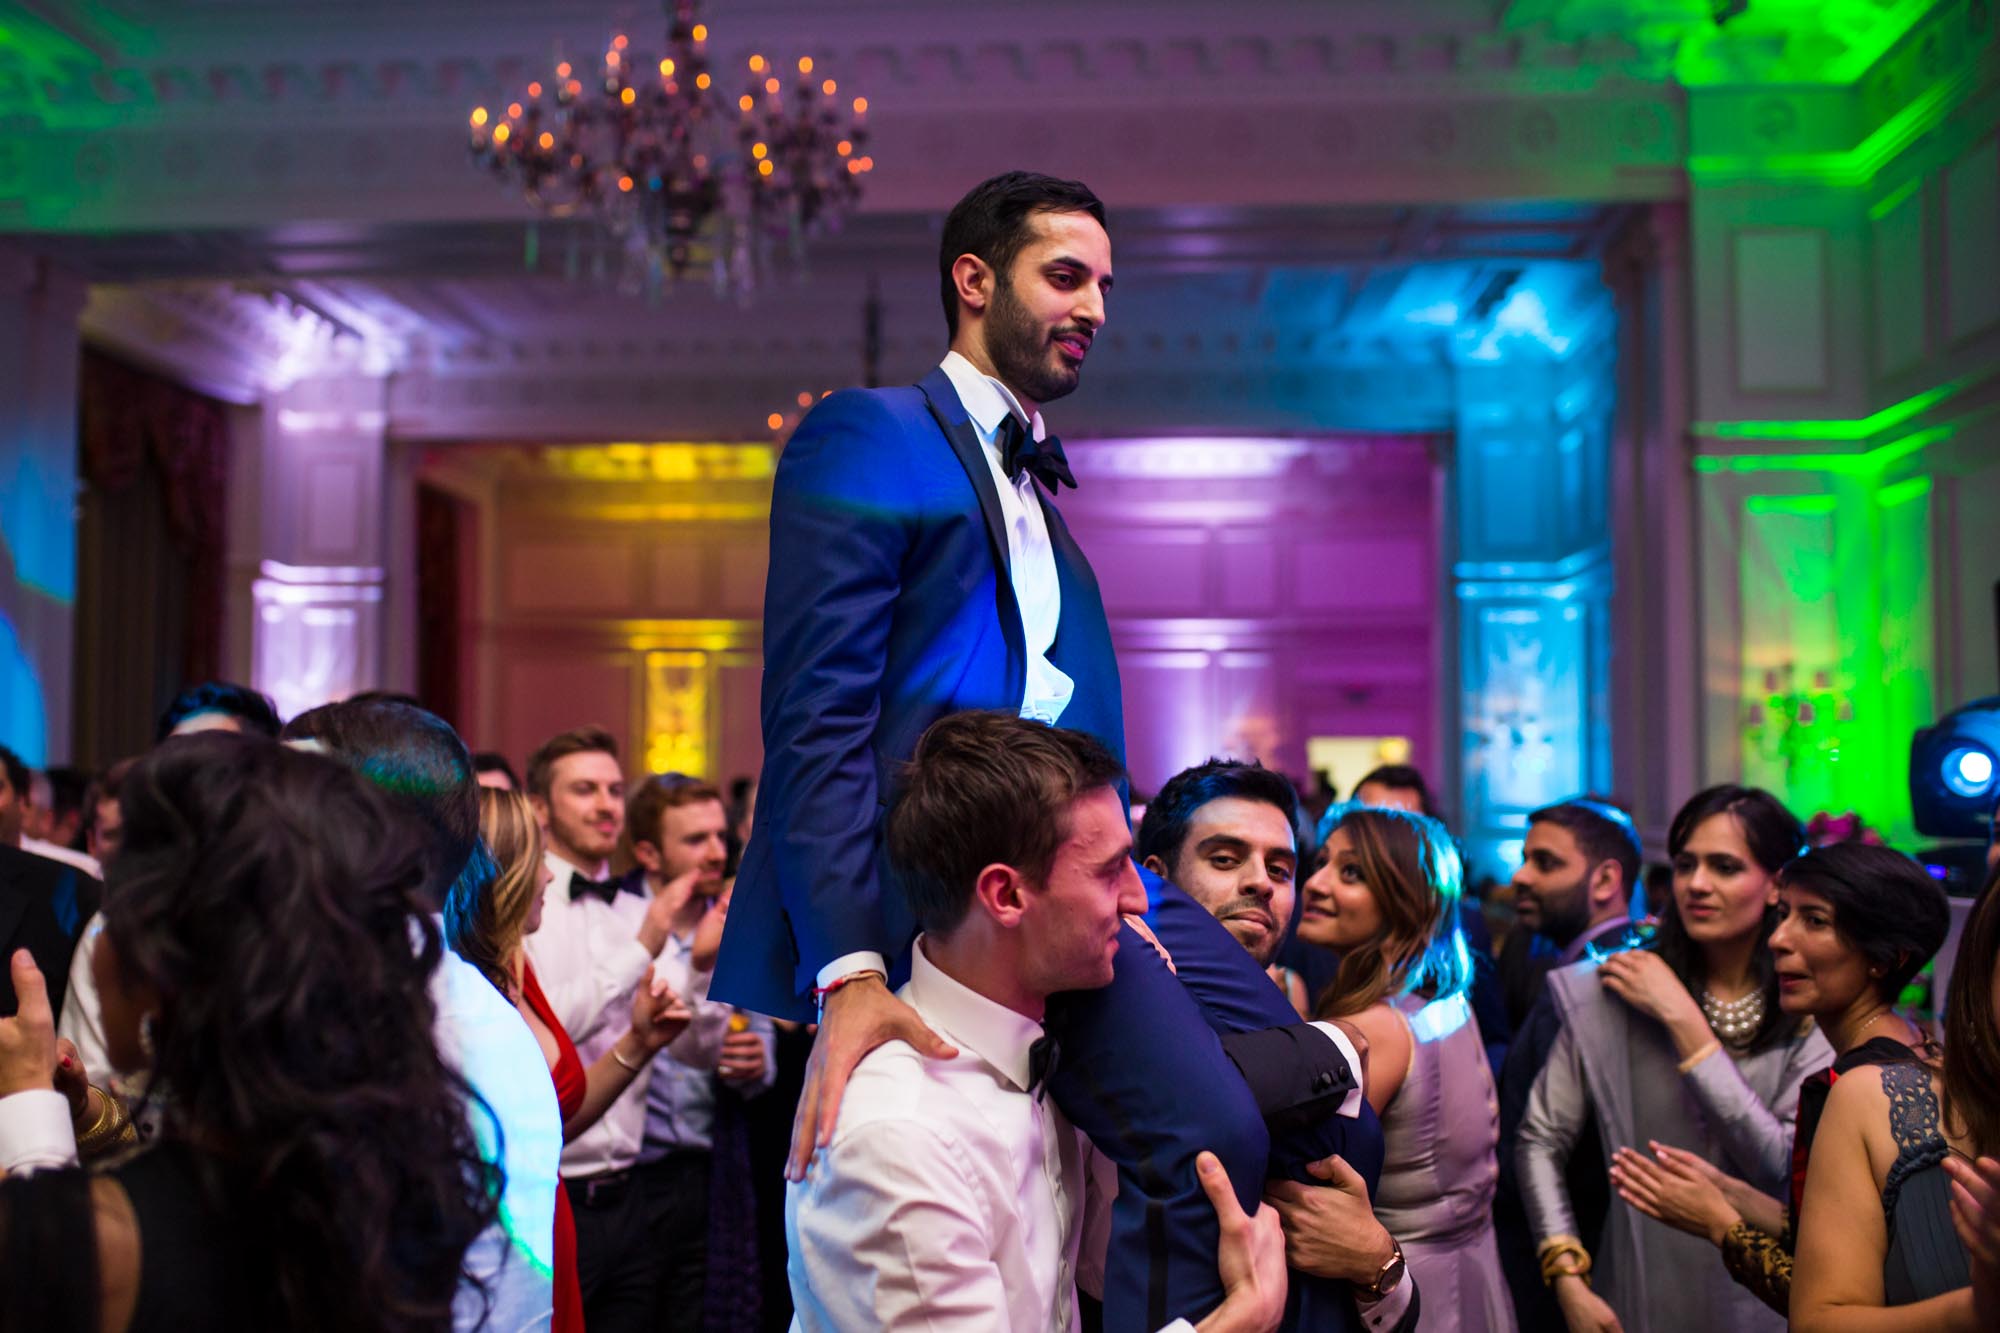 Sikh wedding photographer, Landmark Hotel London